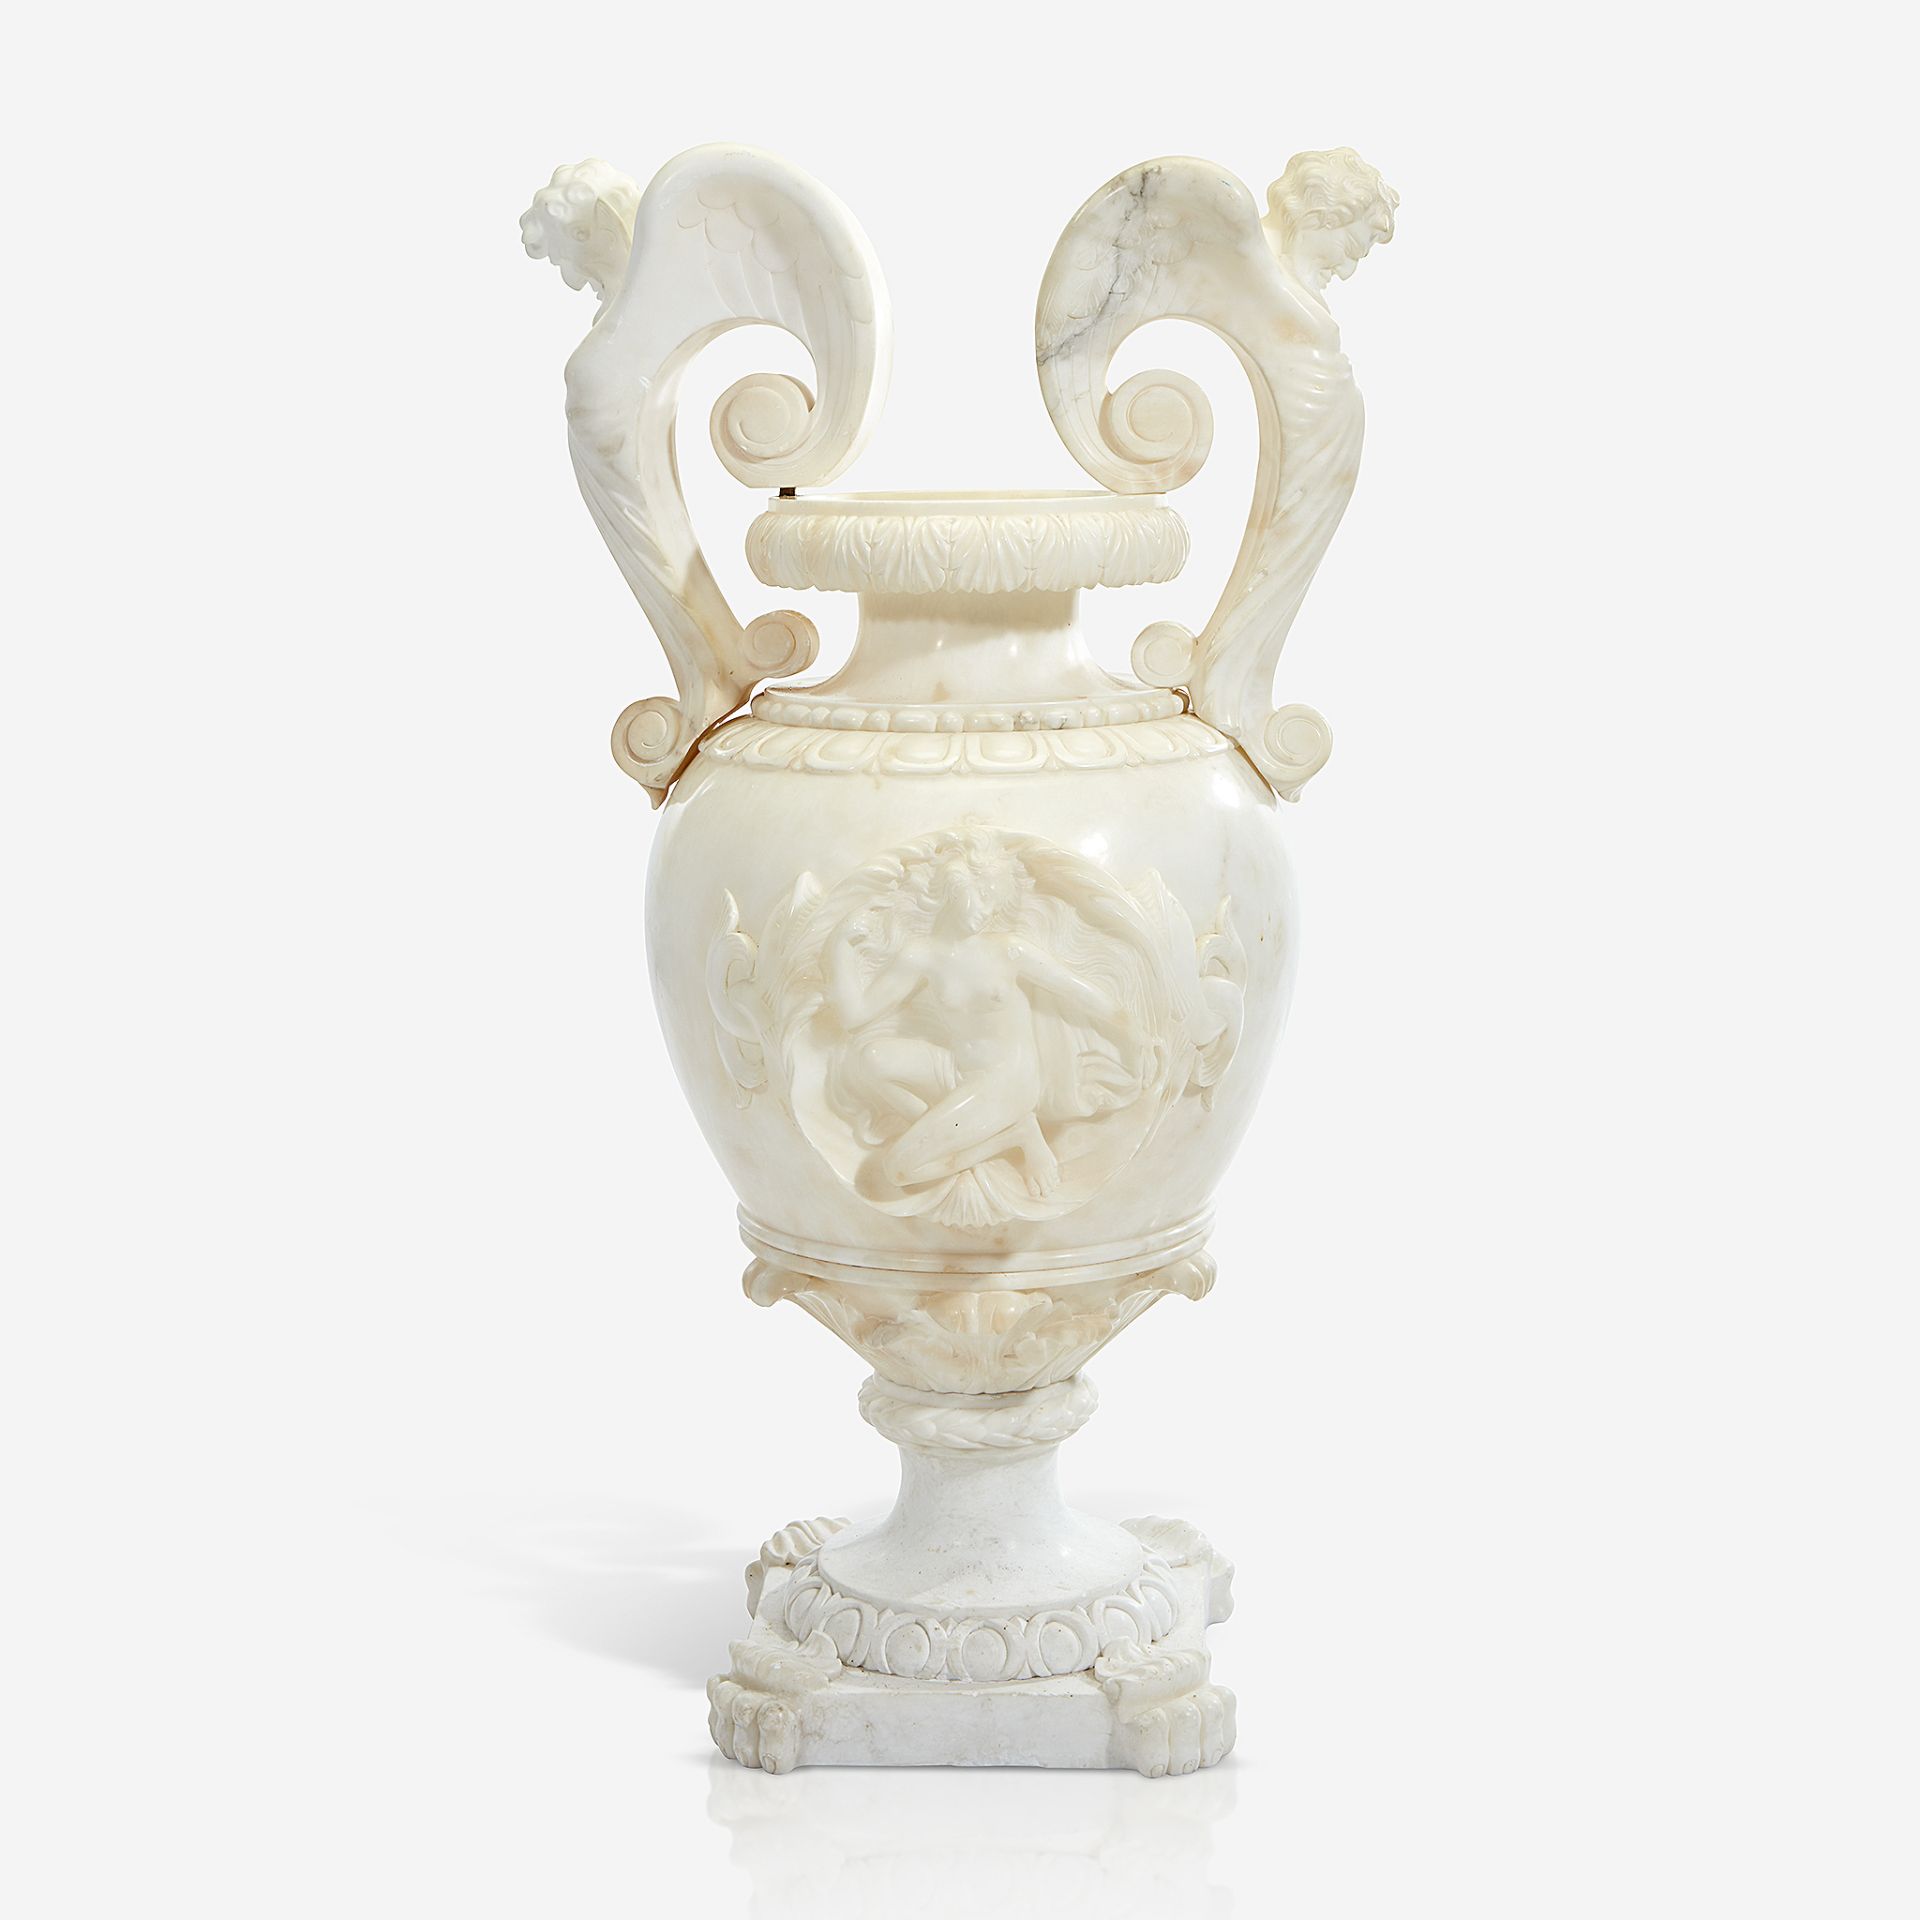 A large Renaissance Revival carved alabaster floor vase, Late 19th century